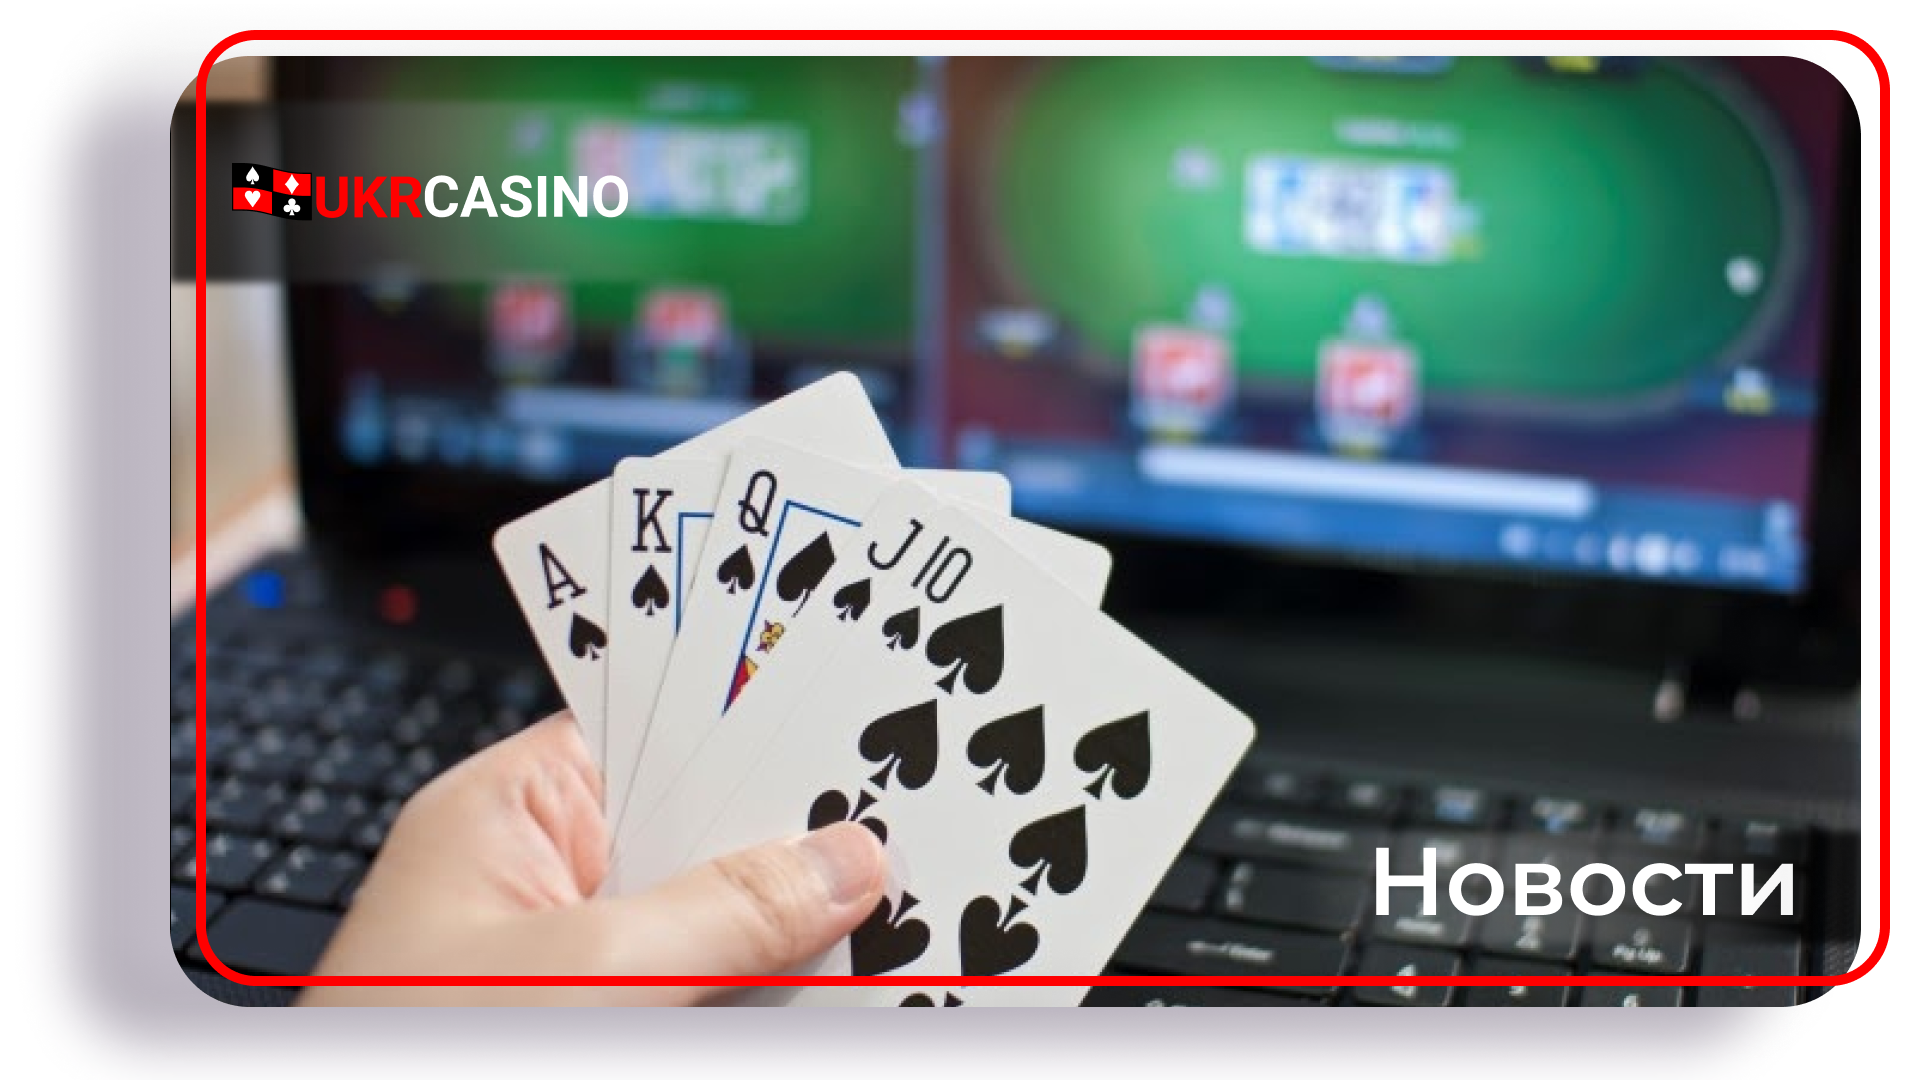 Покер 21 онлайн ставка на жизнь смотреть онлайн 720